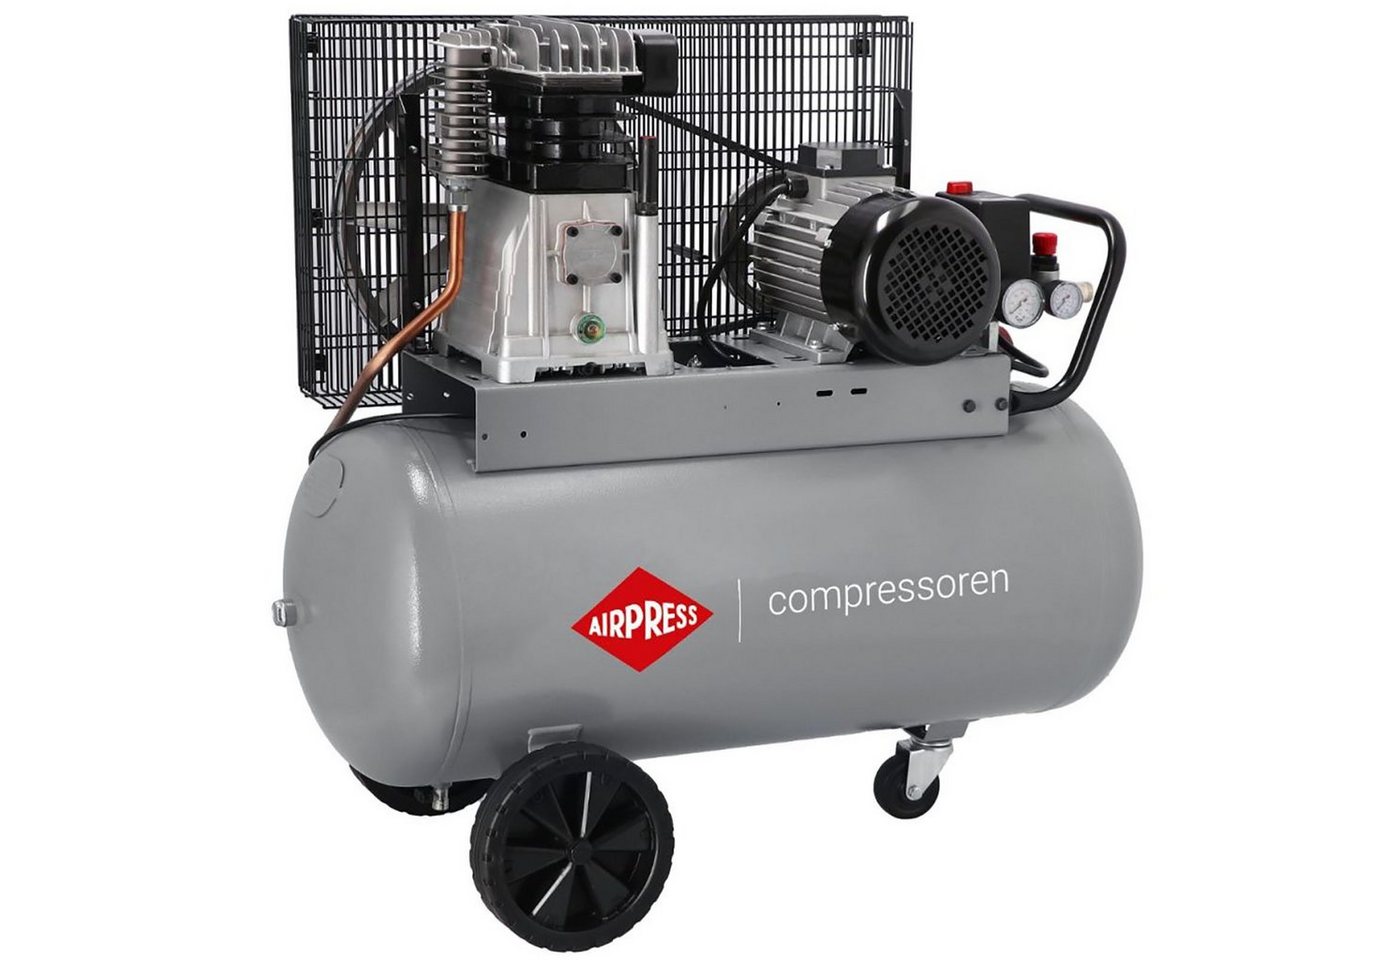 Airpress Kompressor Druckluft- Kompressor 4,0 PS 90 Liter 10 bar HK 600-90 Typ 360670, max. 10 bar, 90 l von Airpress